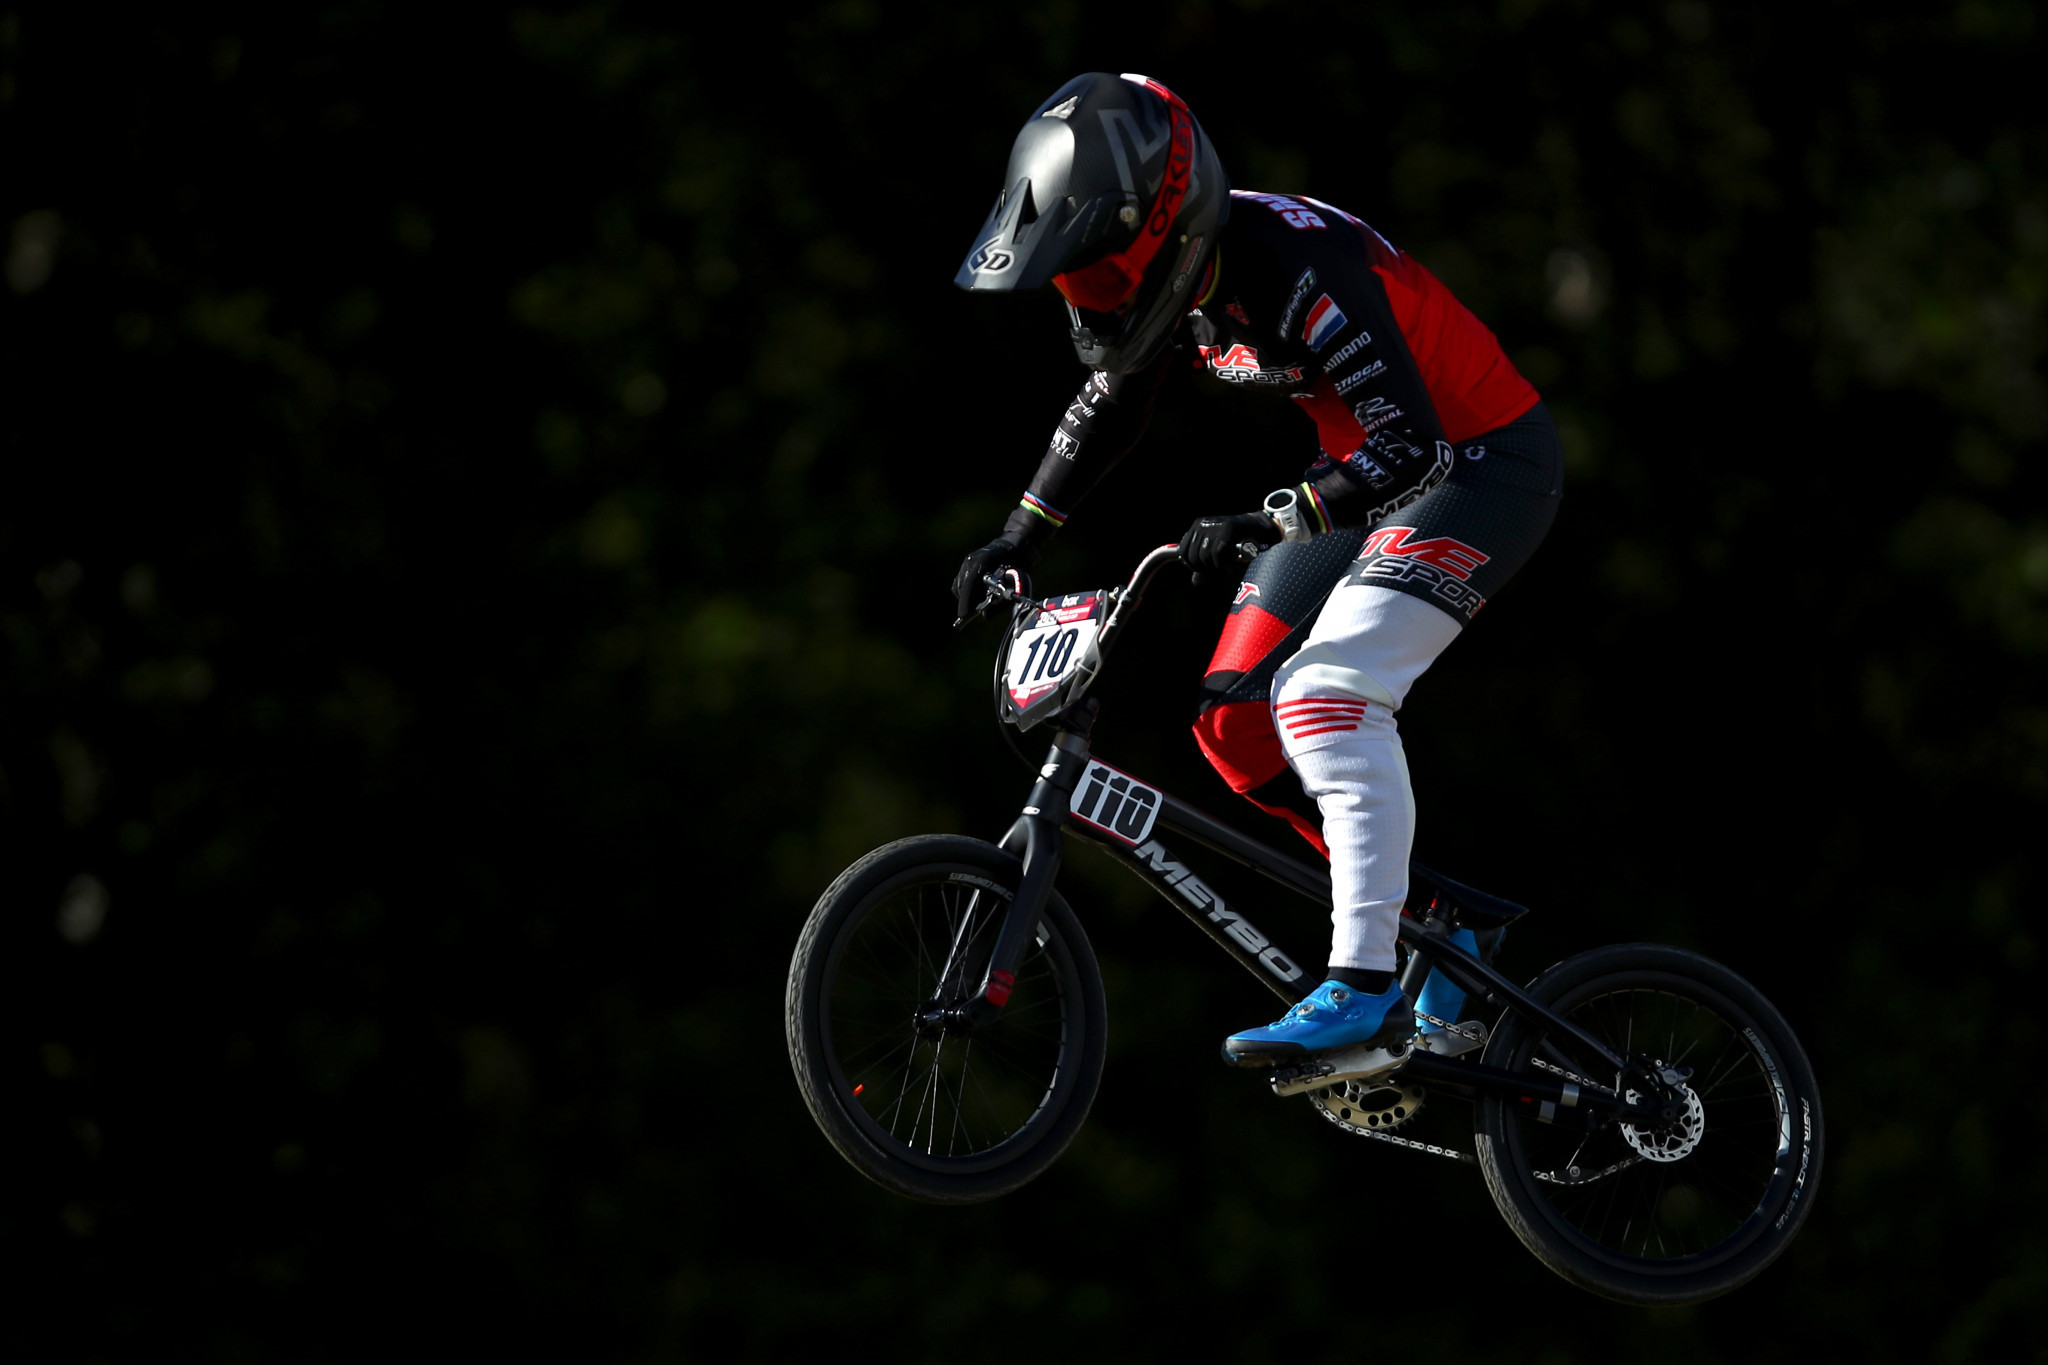 Verona ready for opening leg of UCI BMX Supercross World Cup season